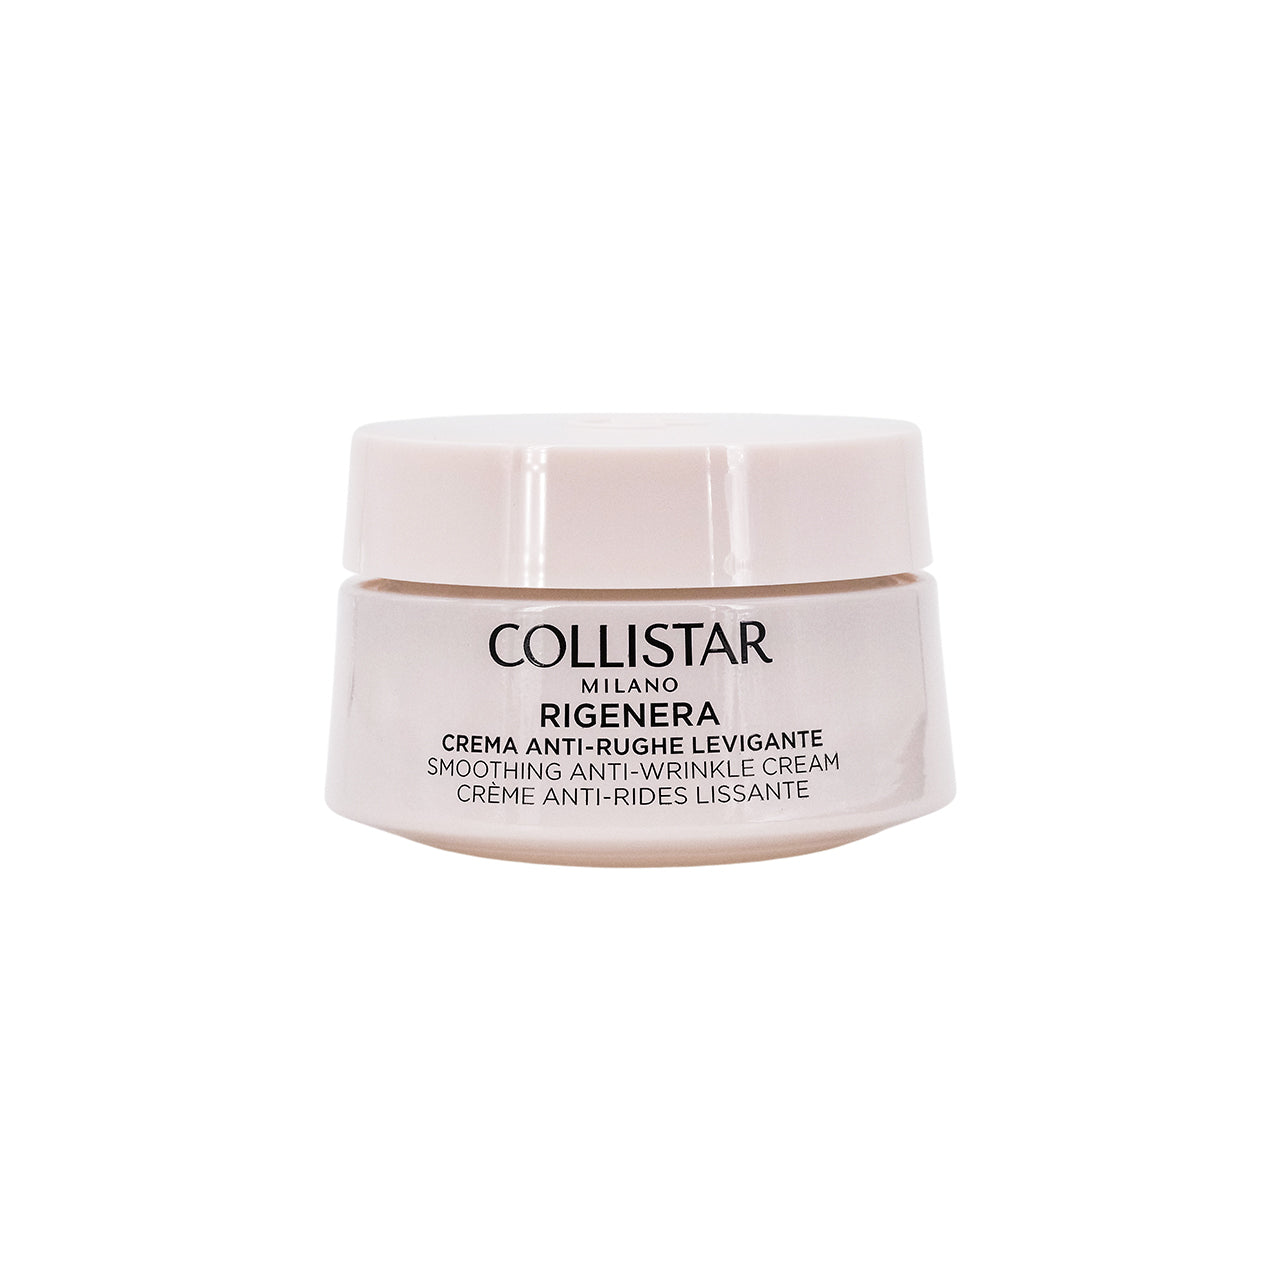 Collistar Rigenera Smoothing Anti-Wrinkle Cream 50ml | Sasa Global eShop